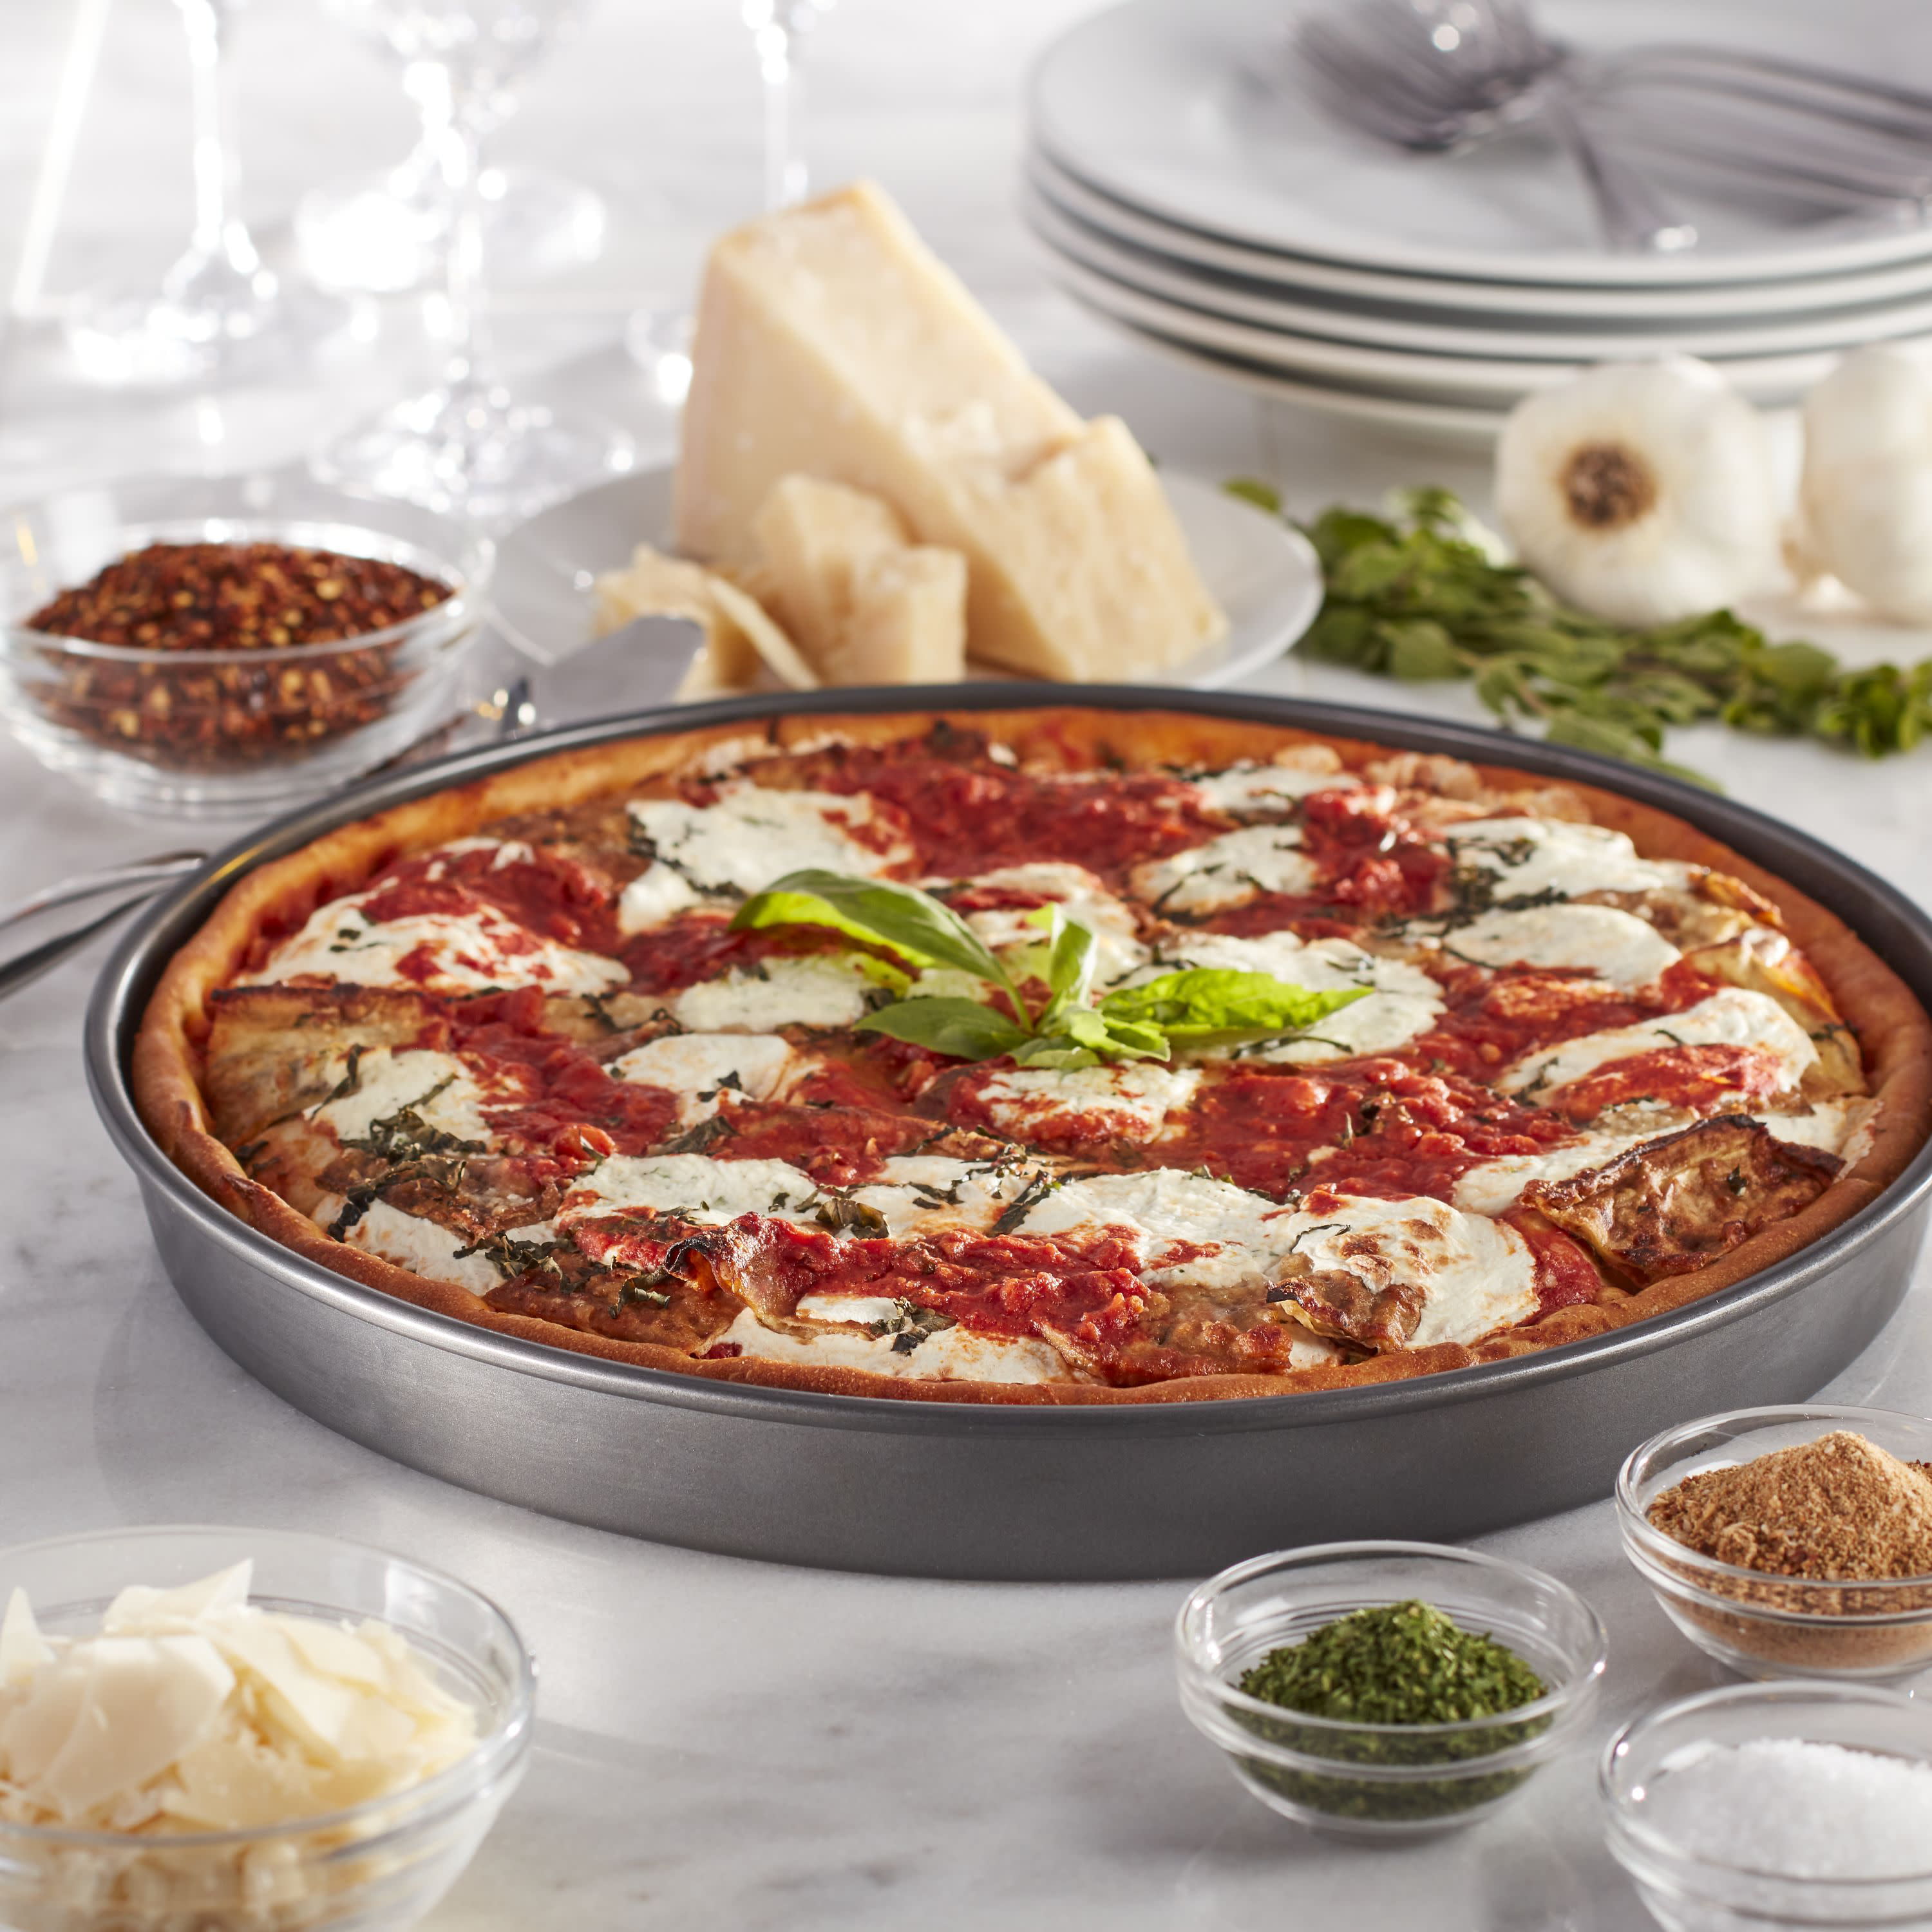 Chicago Metallic Professional 14.25-inch Non-Stick Deep Dish Pizza Pan 